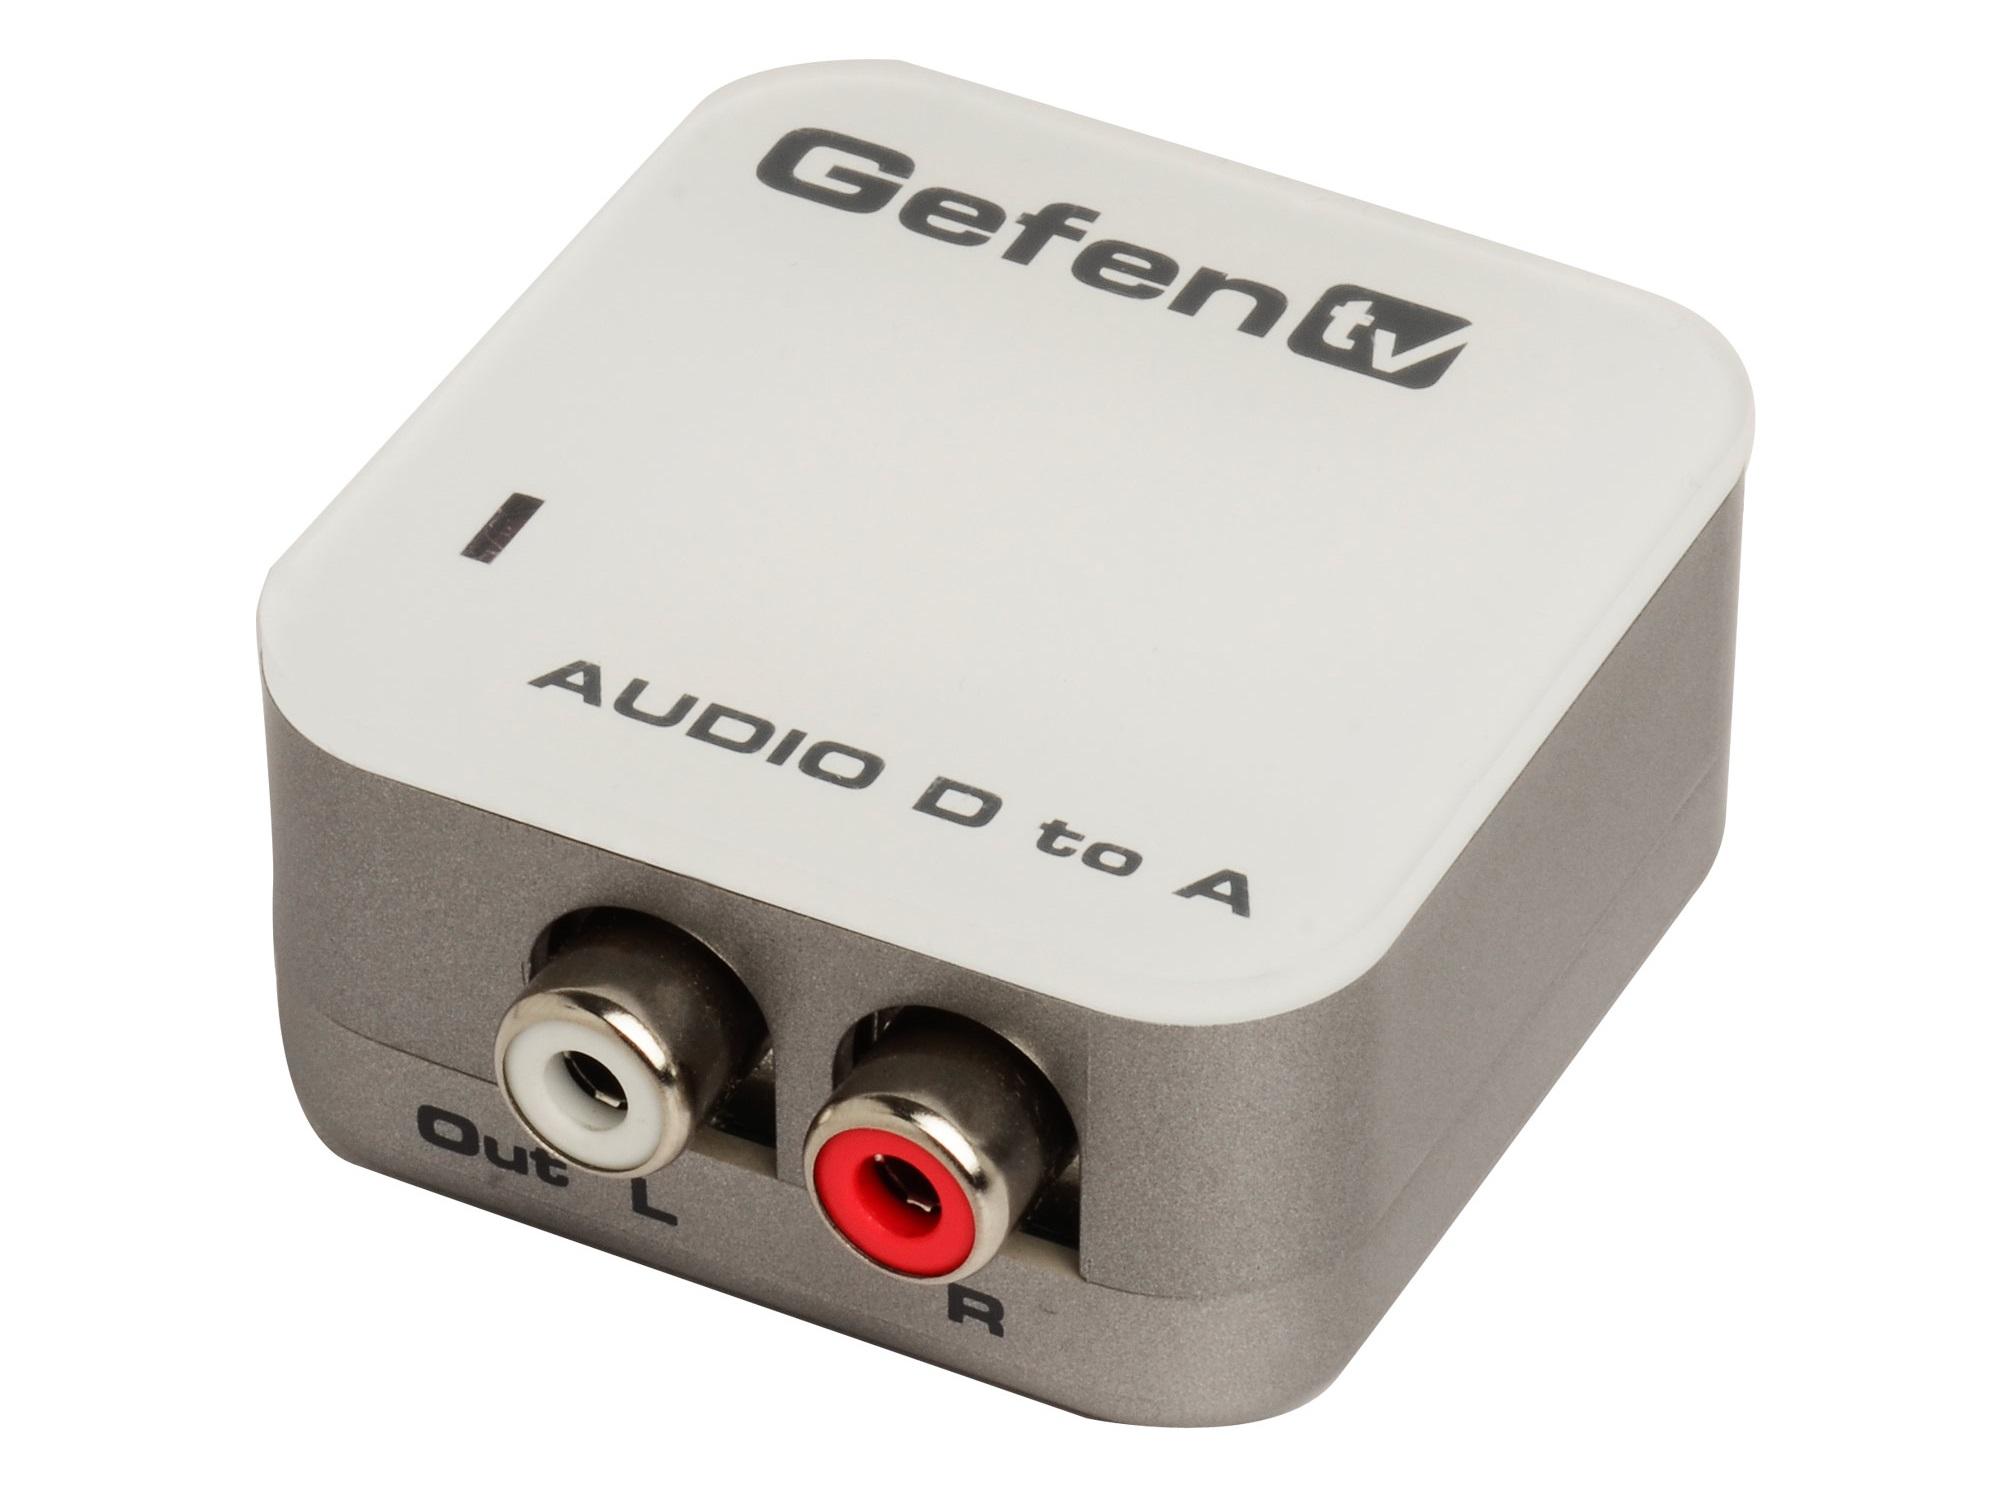 GTV-DIGAUD-2-AAUD Digital To Analog Audio converter by Gefen